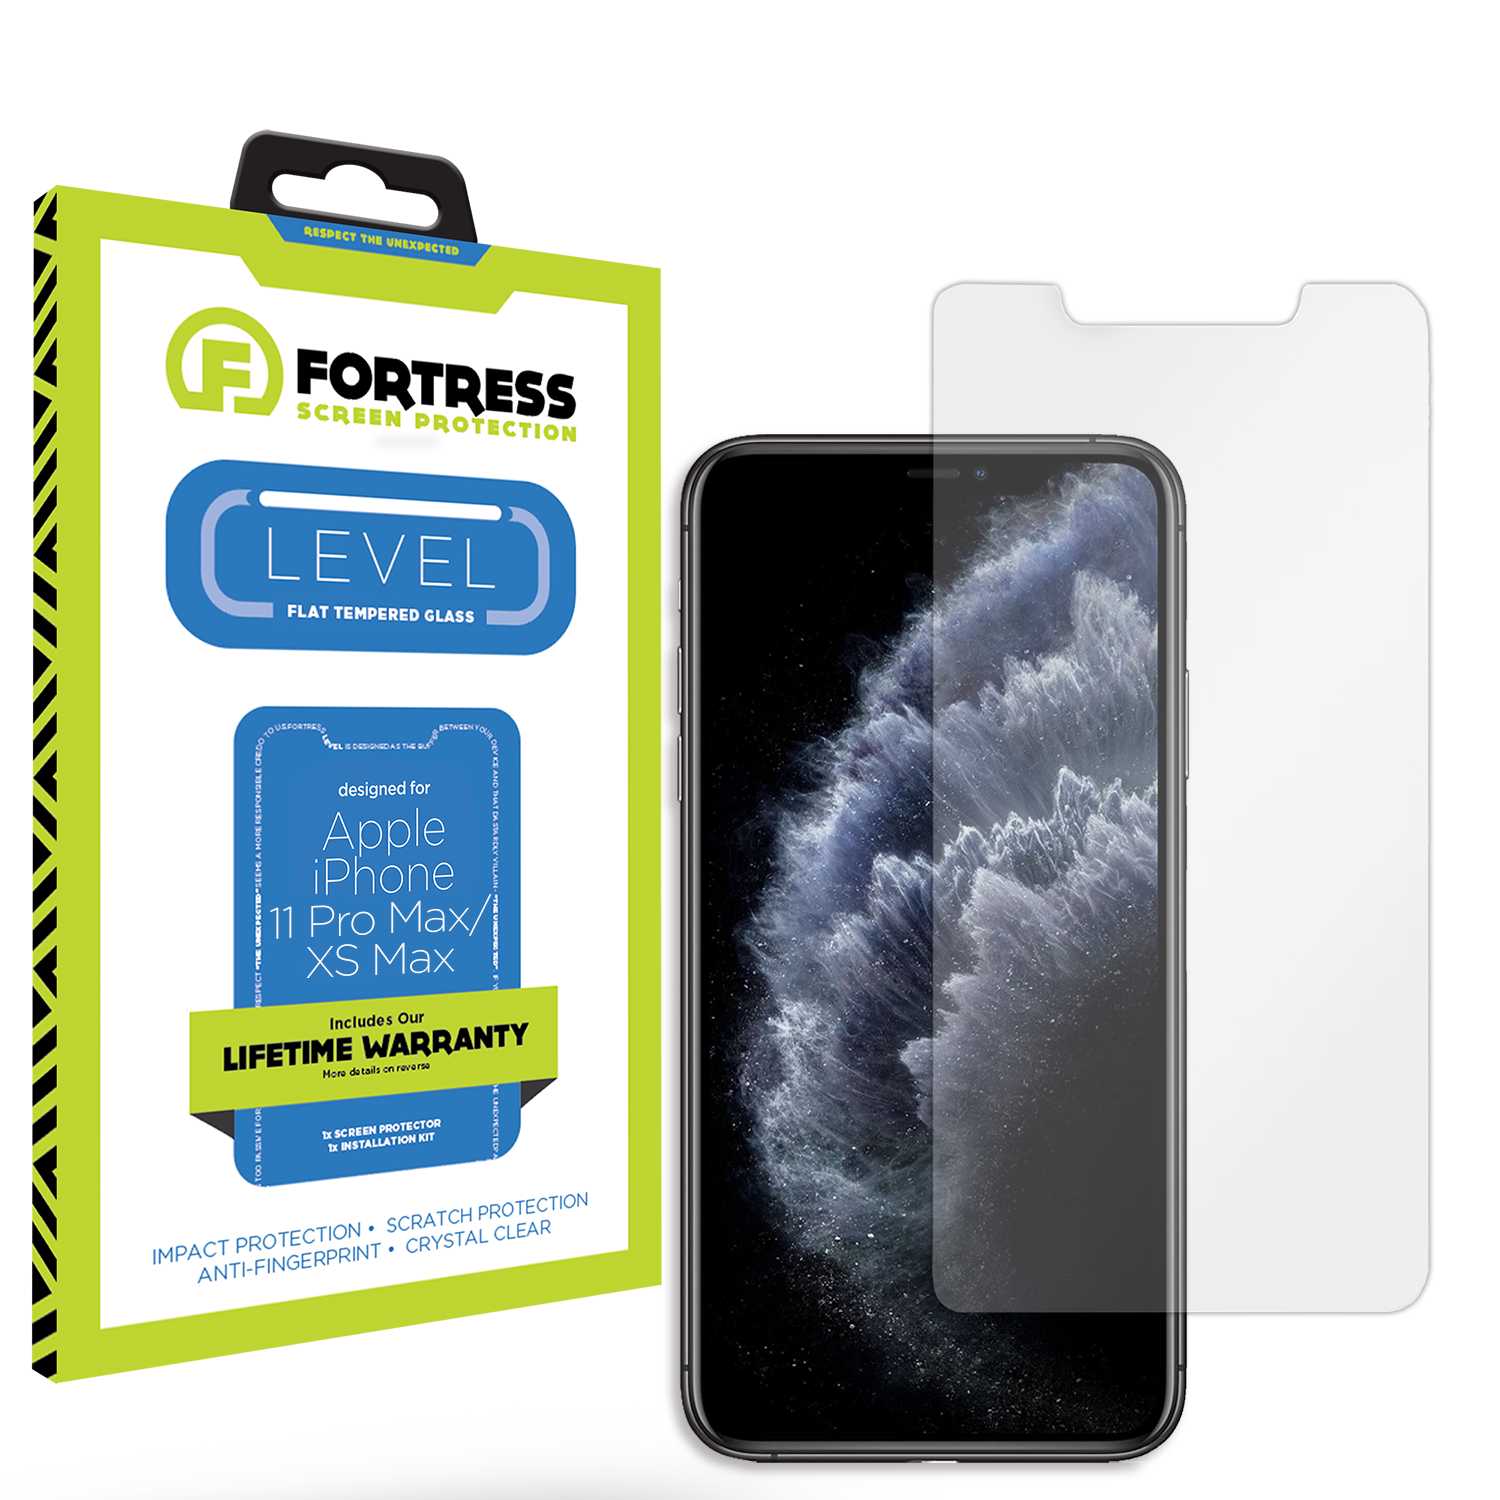 Fortress Fortress Warranty Replacement Program AppleiPhoneXSMaxScreenProtector Warranty 8.99